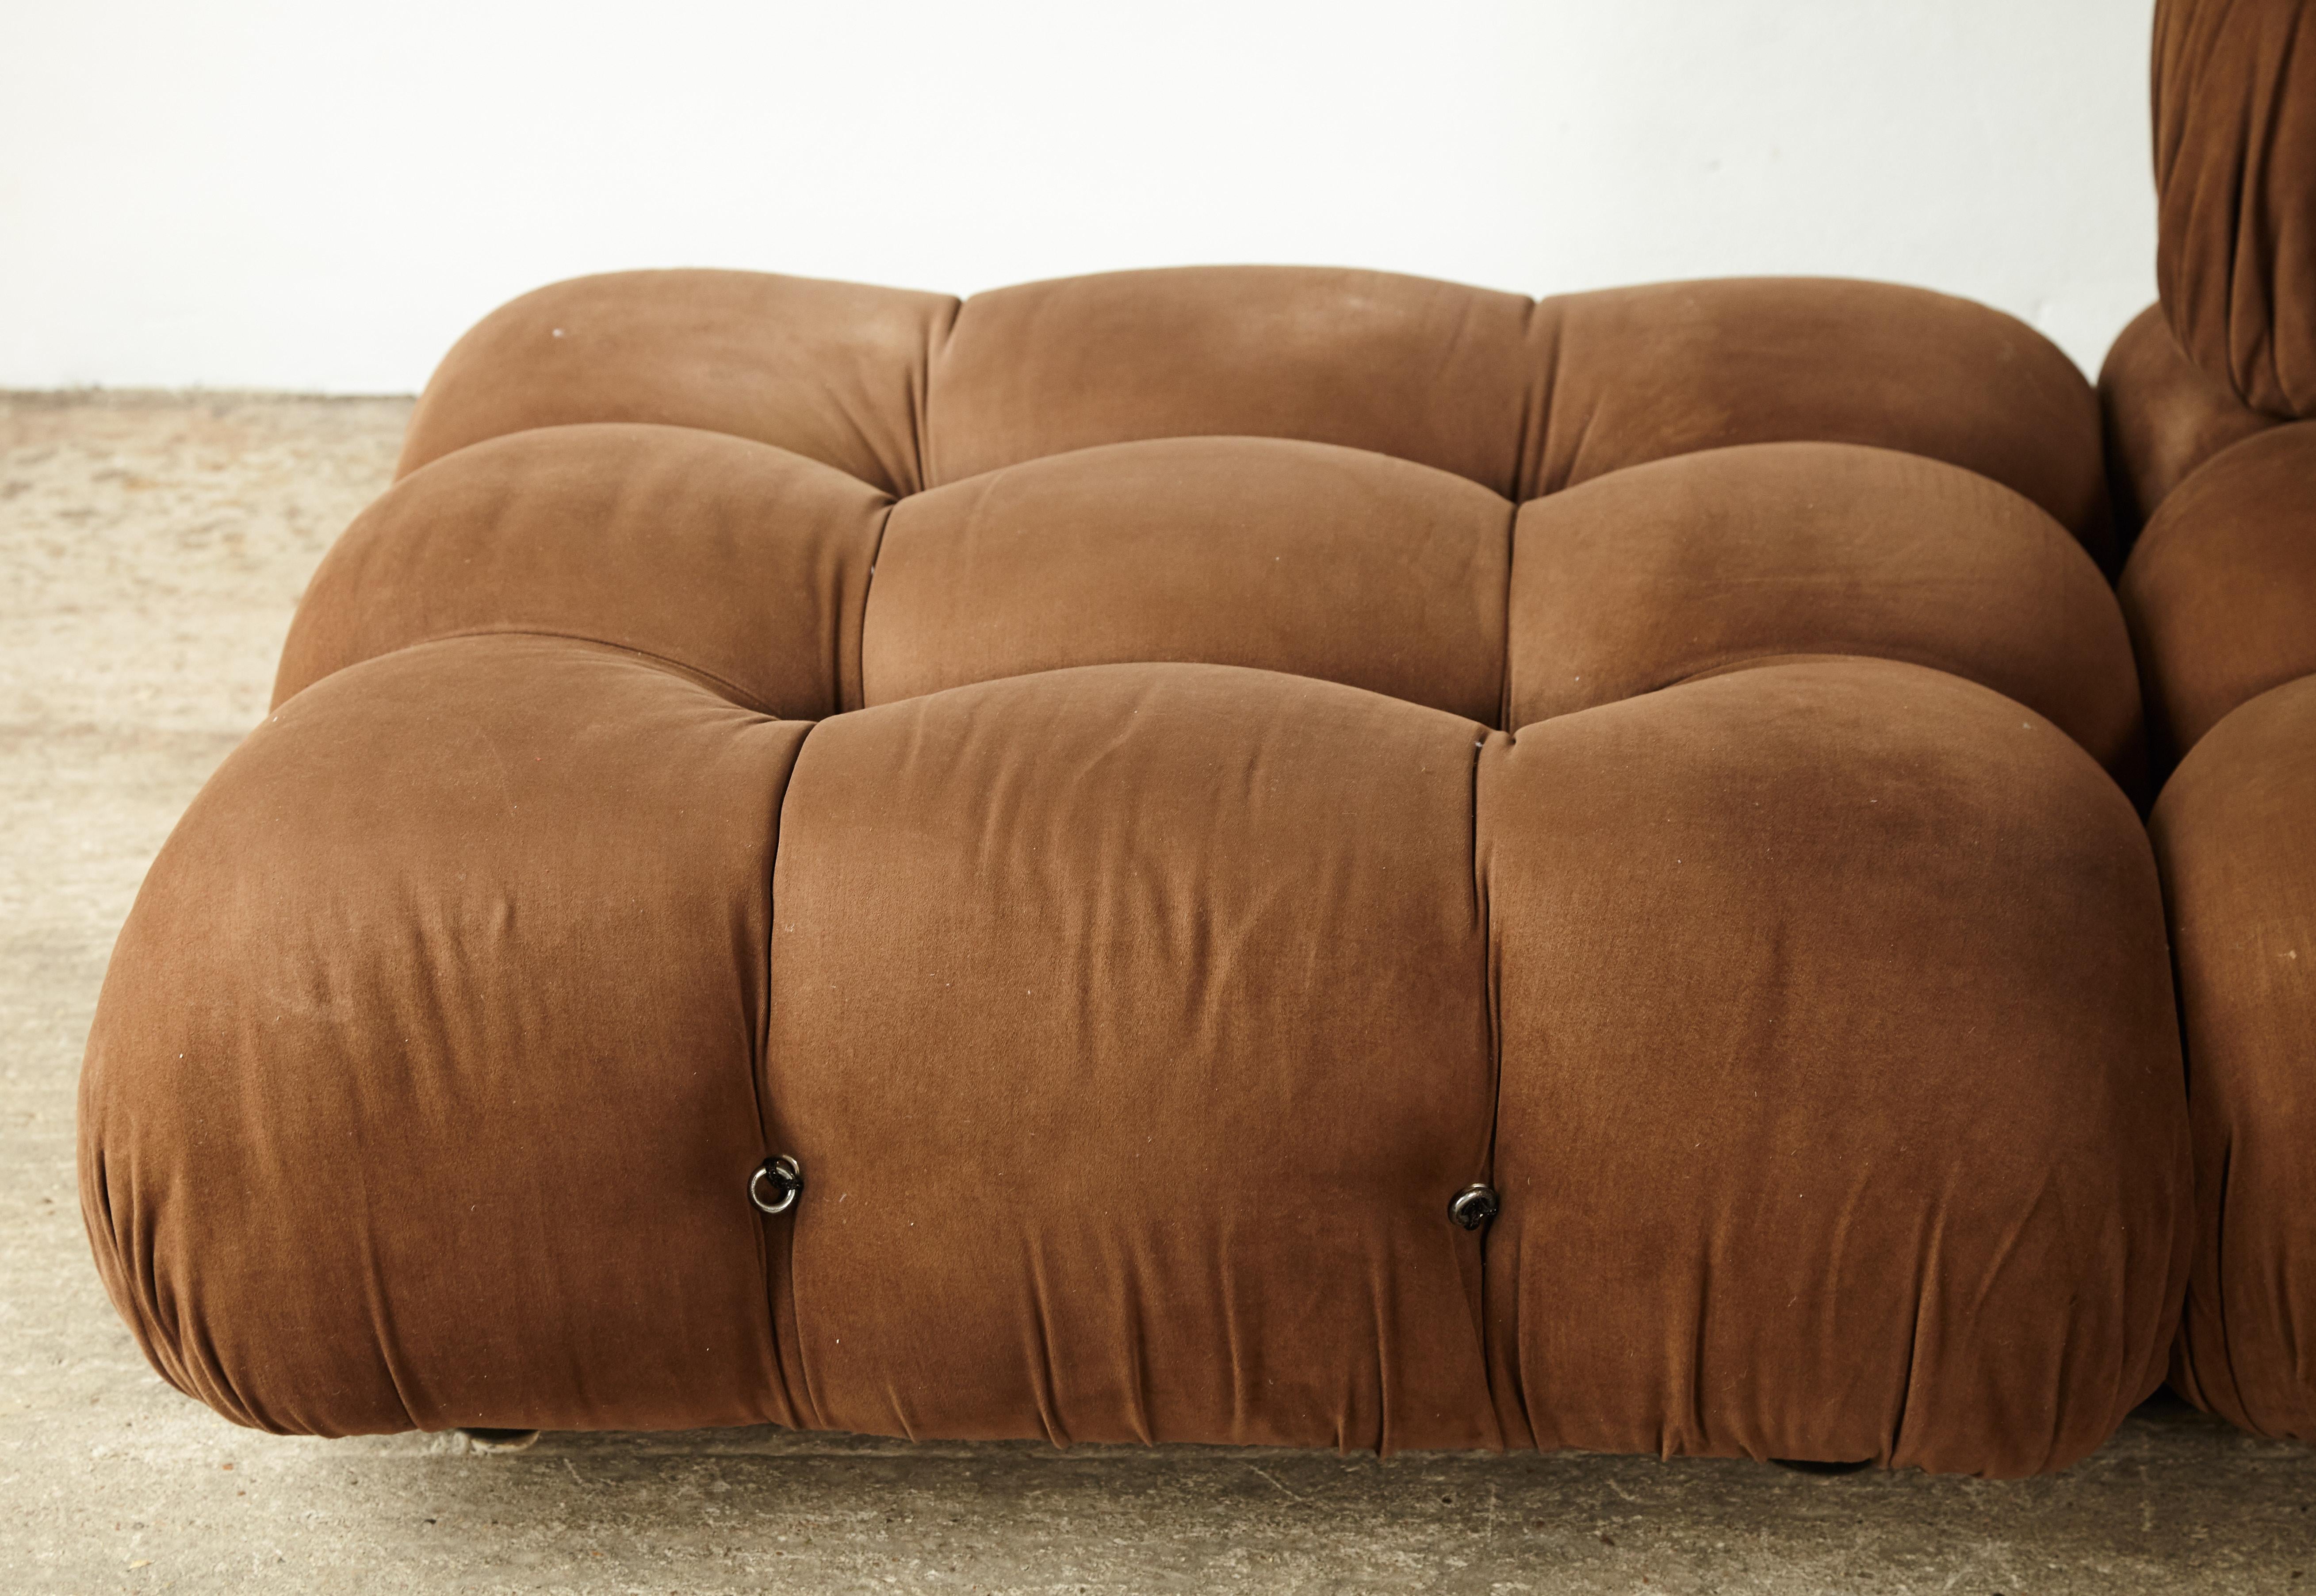 b&b italia replacement sofa covers